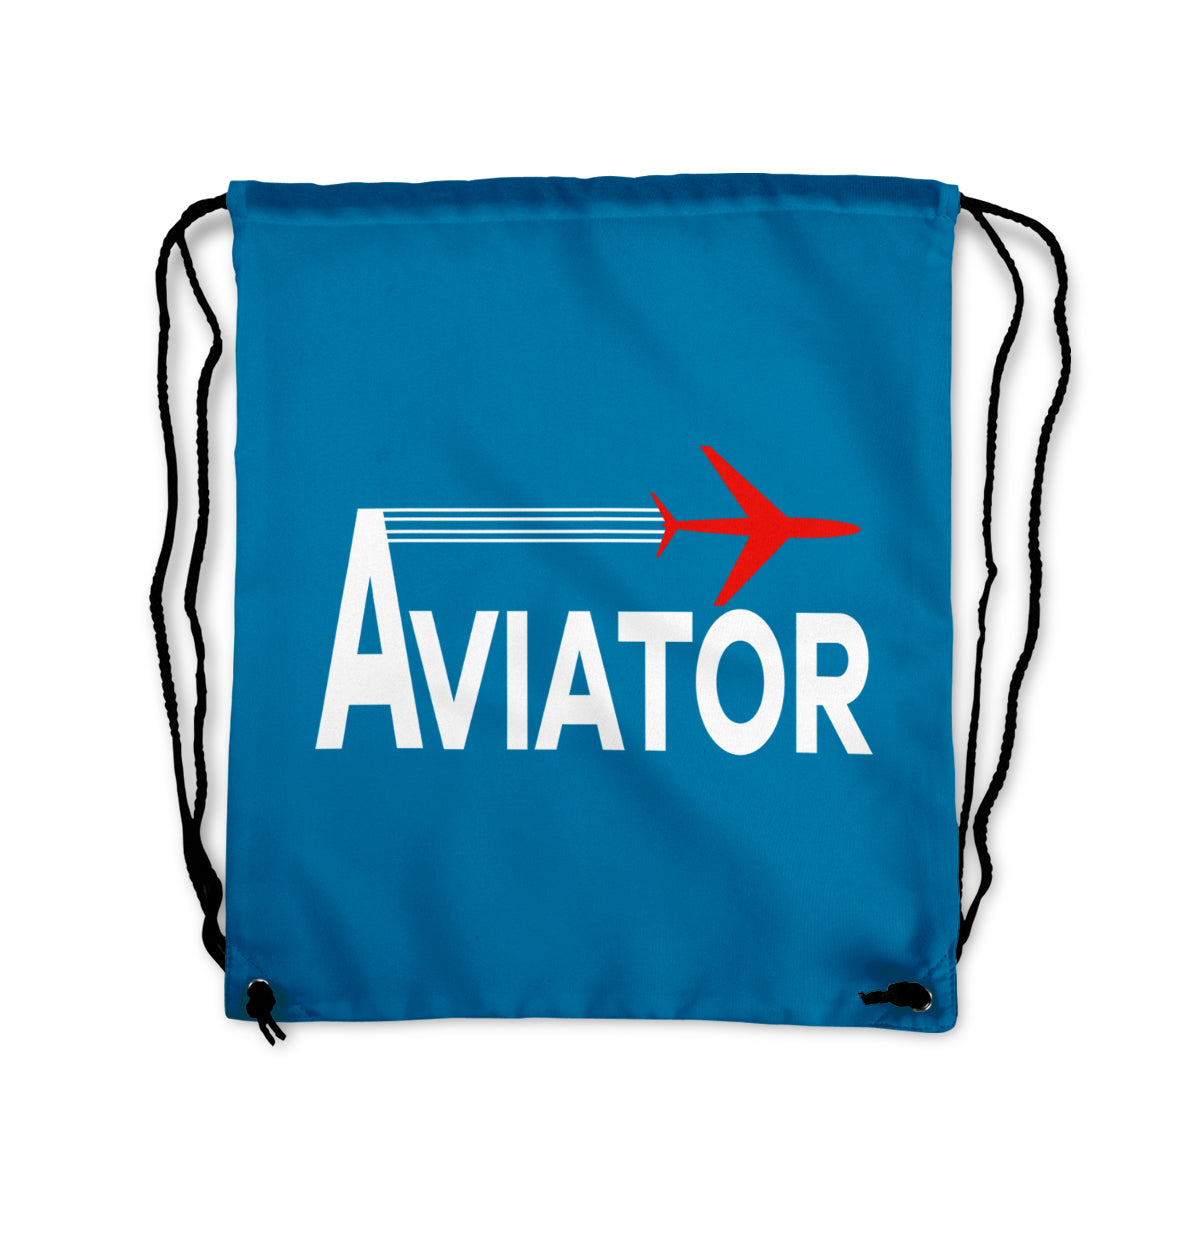 Aviator Designed Drawstring Bags